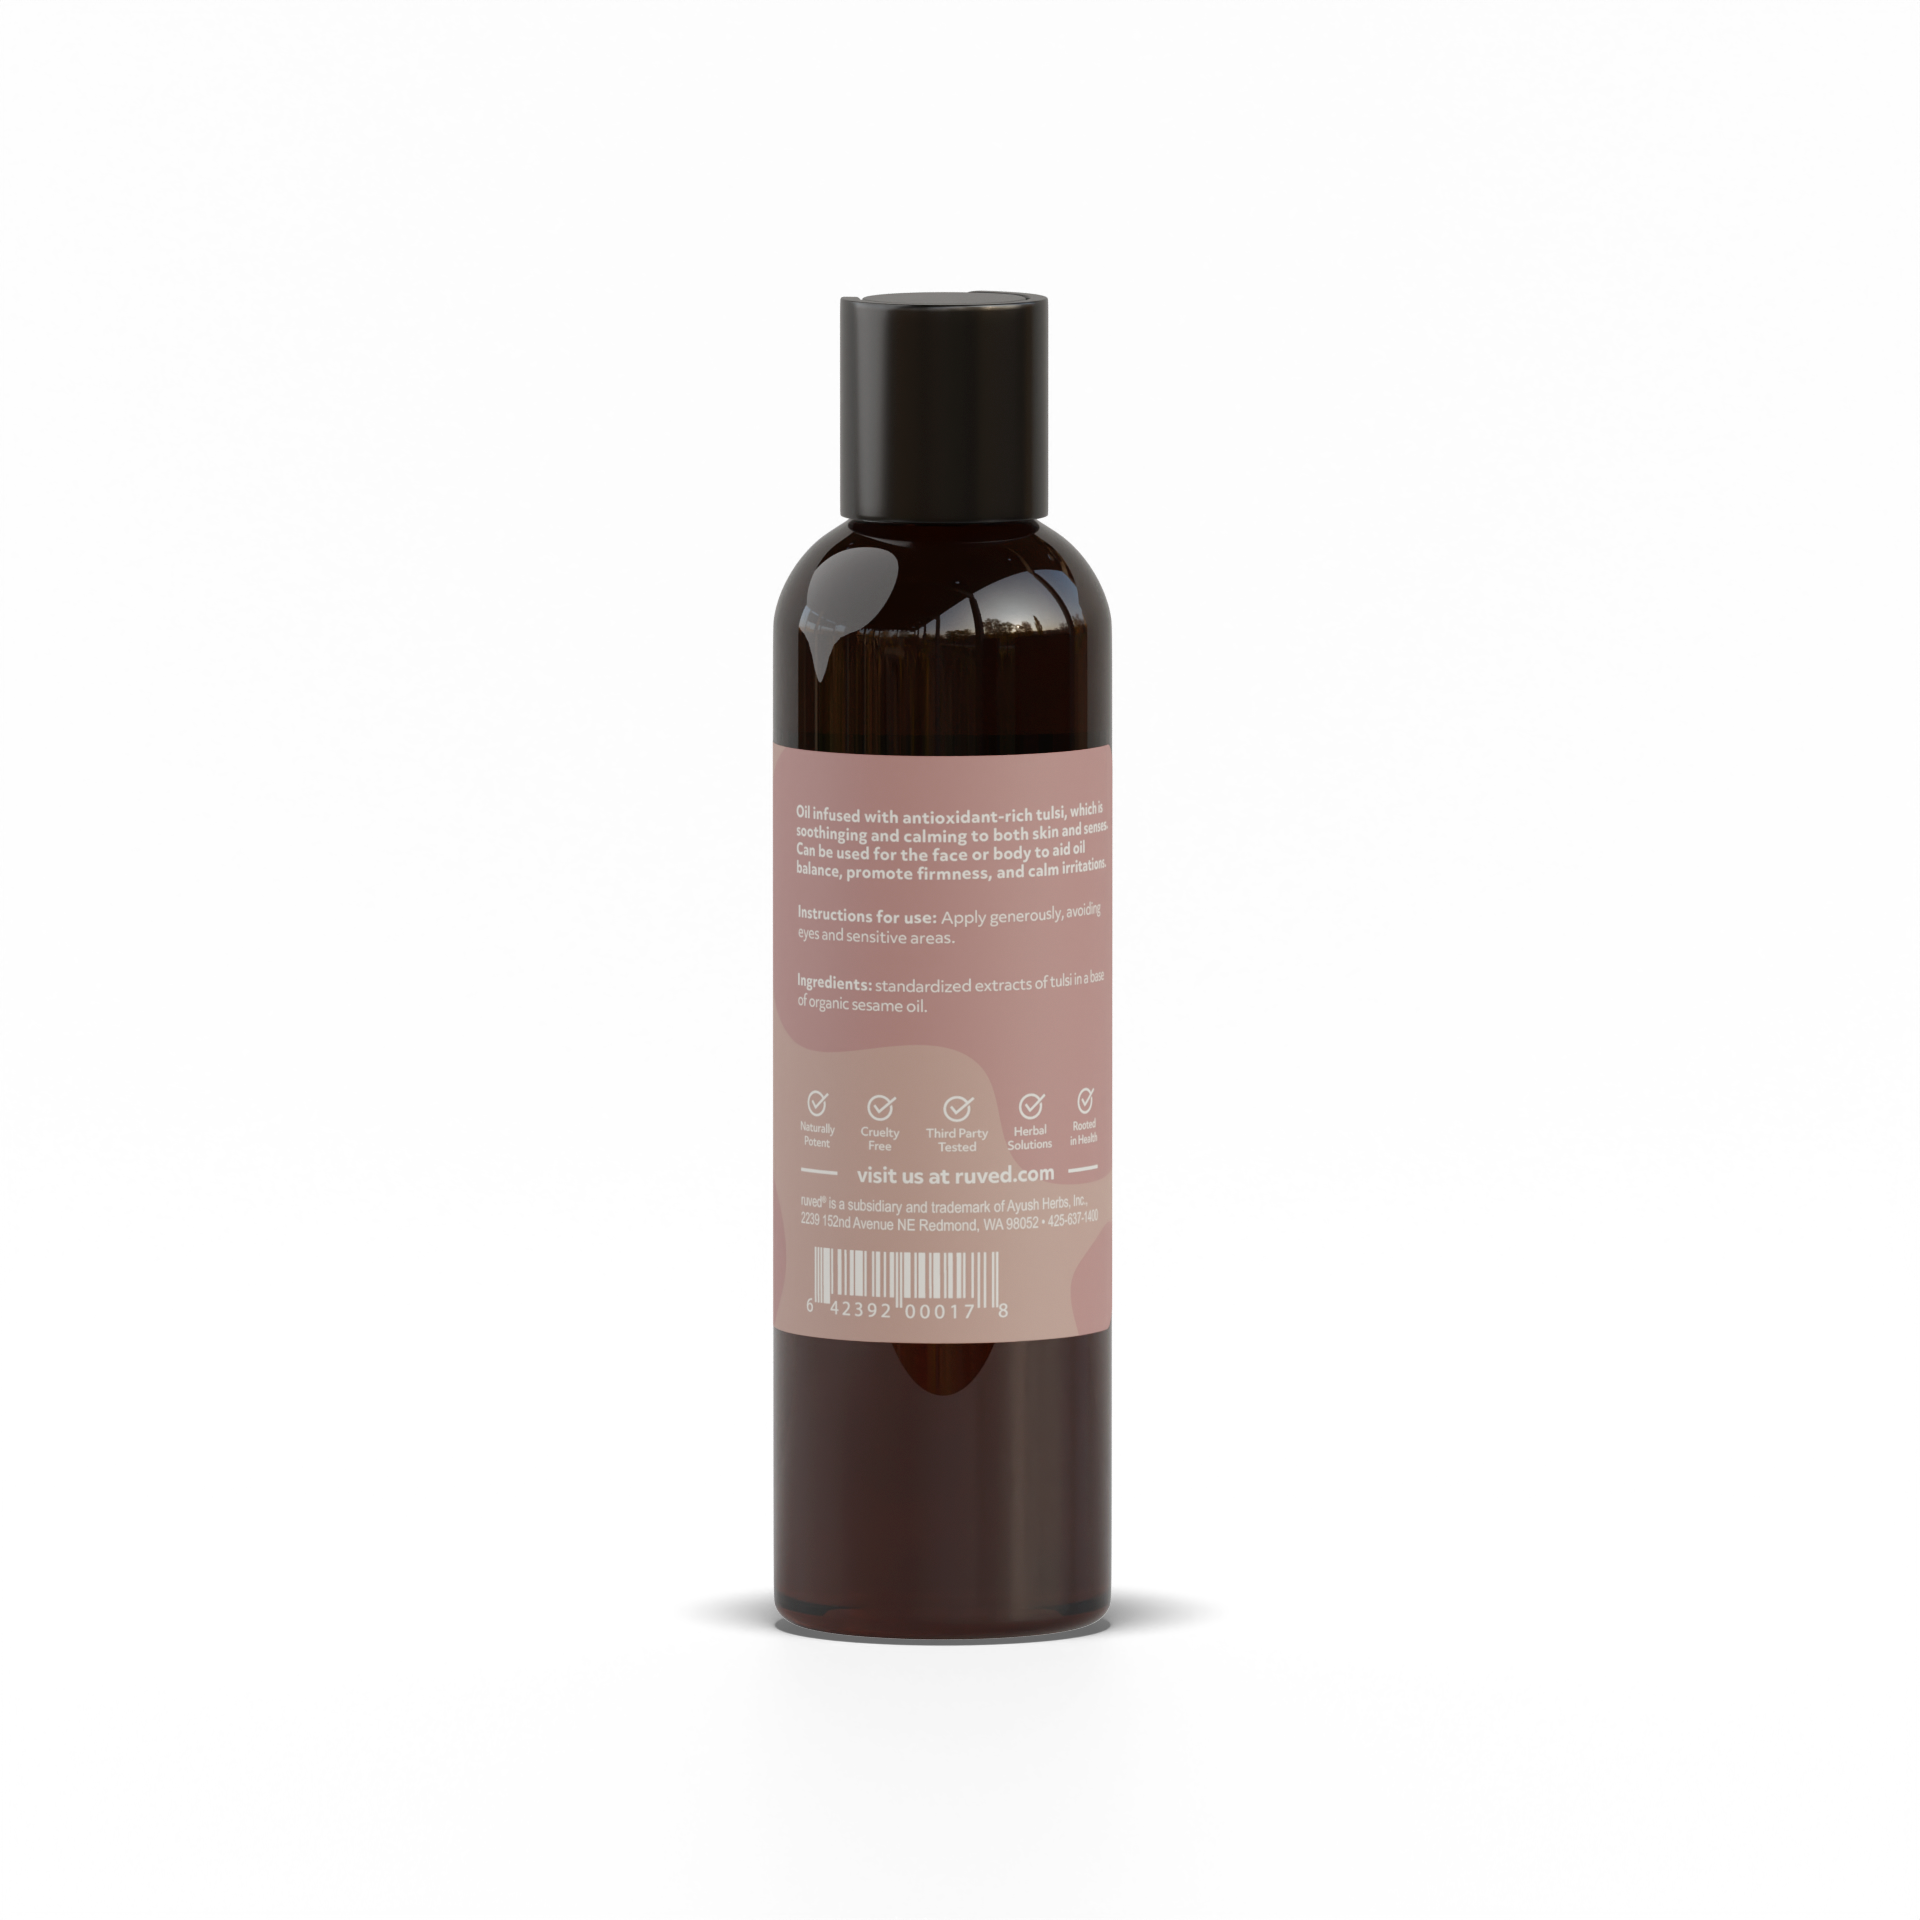 Tulsi Body Oil Supplement Facts Back Side- Organic Holy Basil Infused Oil, 100ml Bottle, Nourishing Herbal Skincare for Radiant Skin.